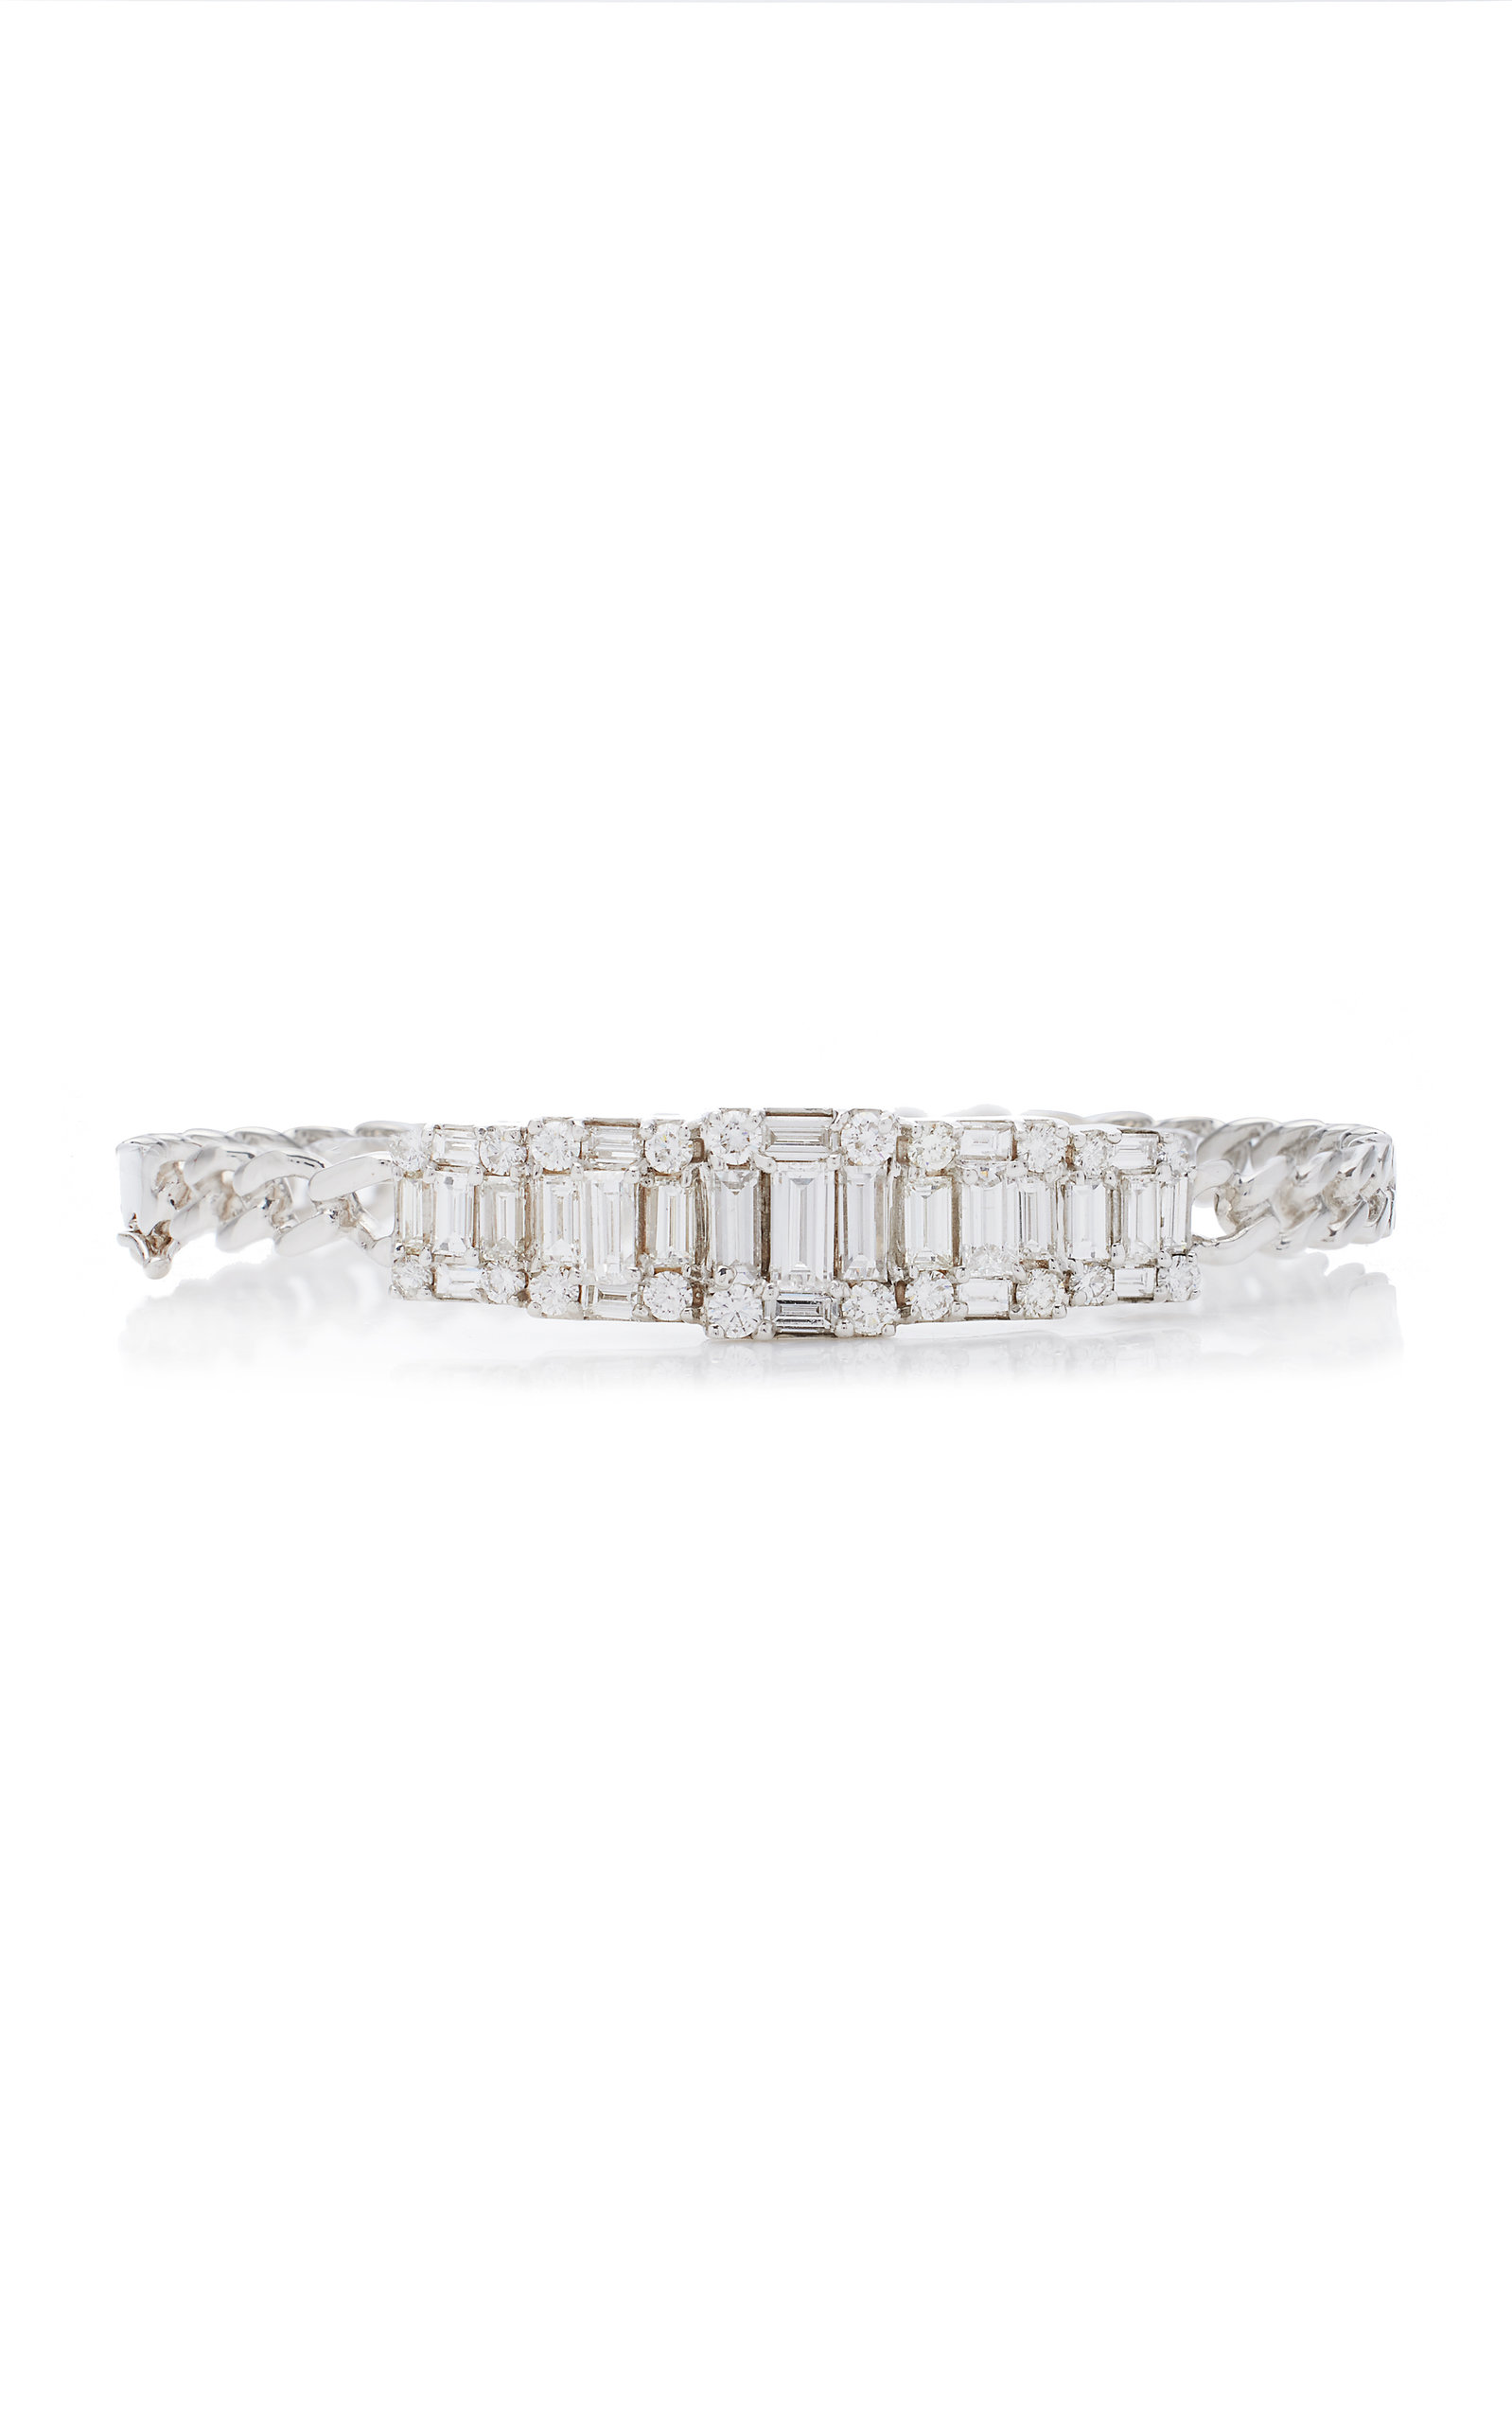 Clarity 18K White Gold Diamond Chain Bracelet